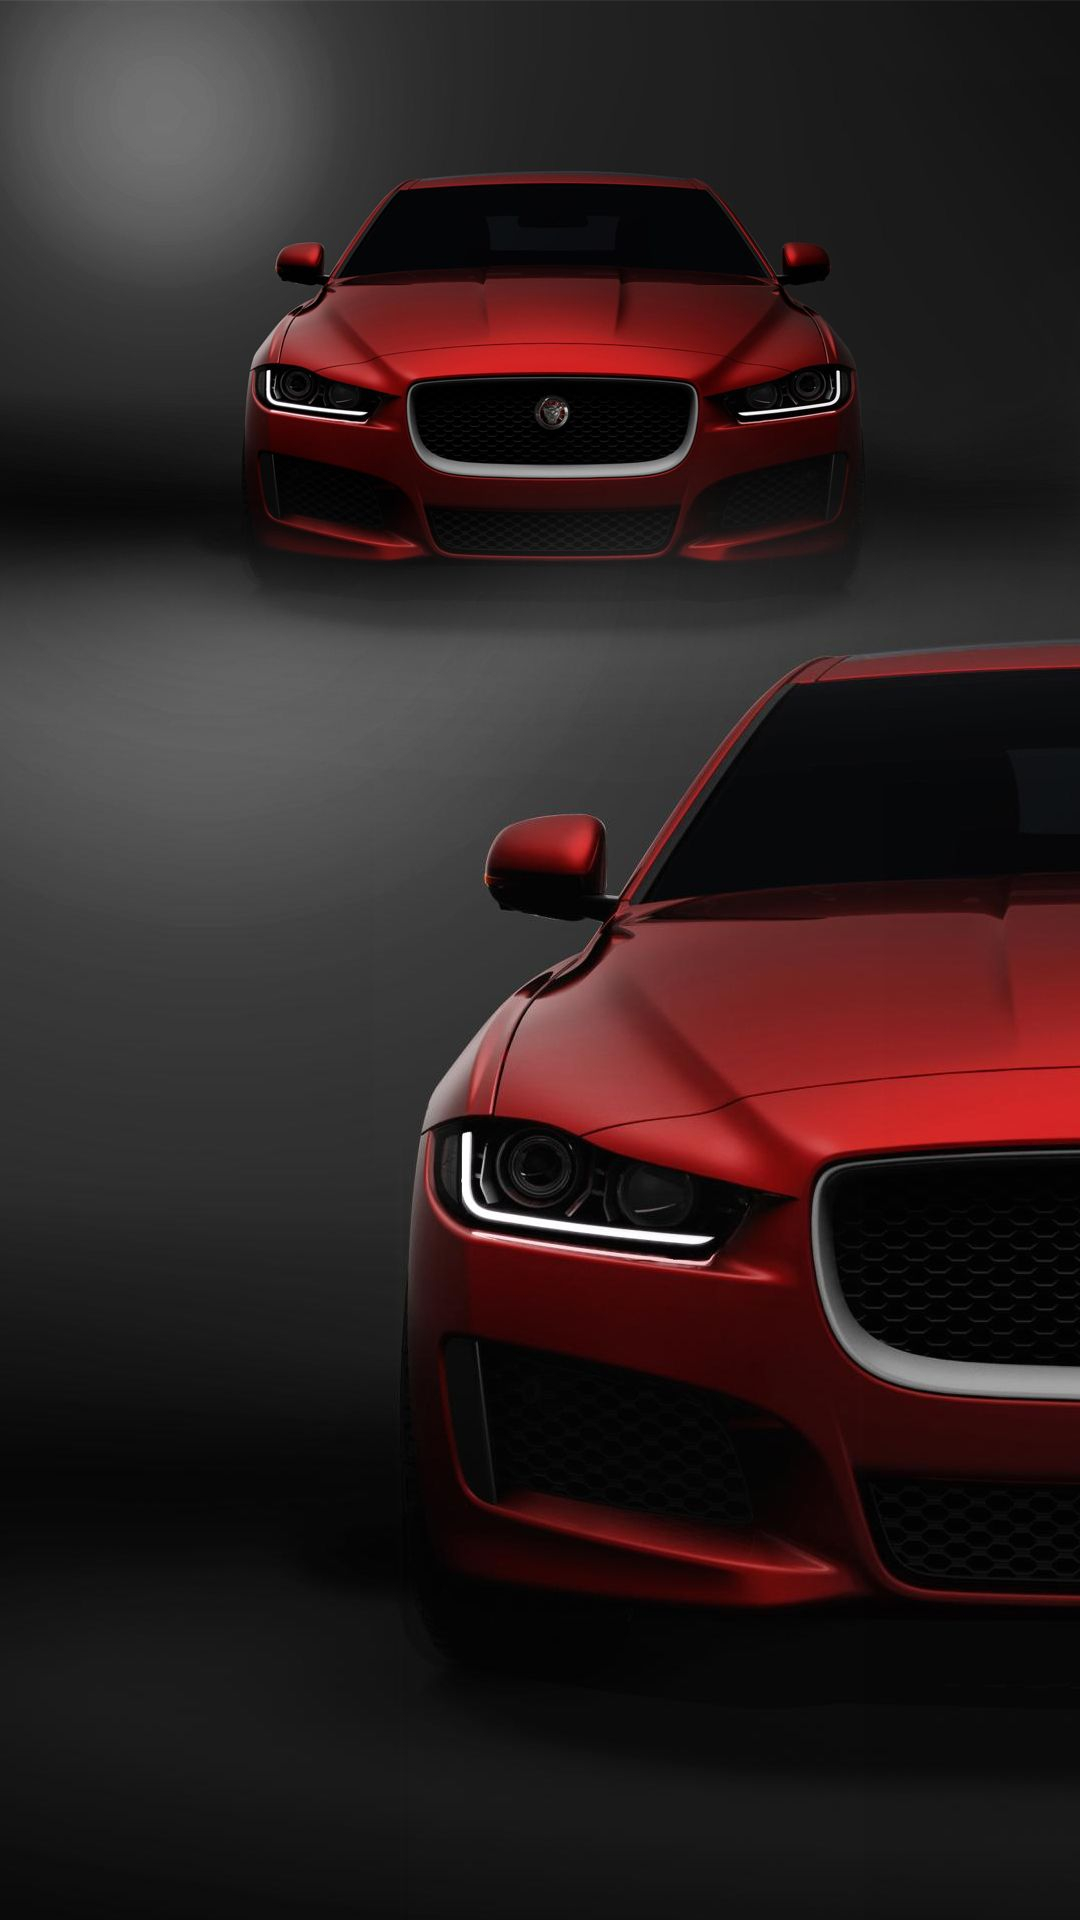 1080x1920 Red Car Wallpaper Hd For Mobile HD Image for Free | Hintergrundbilder, Tablet, Handy